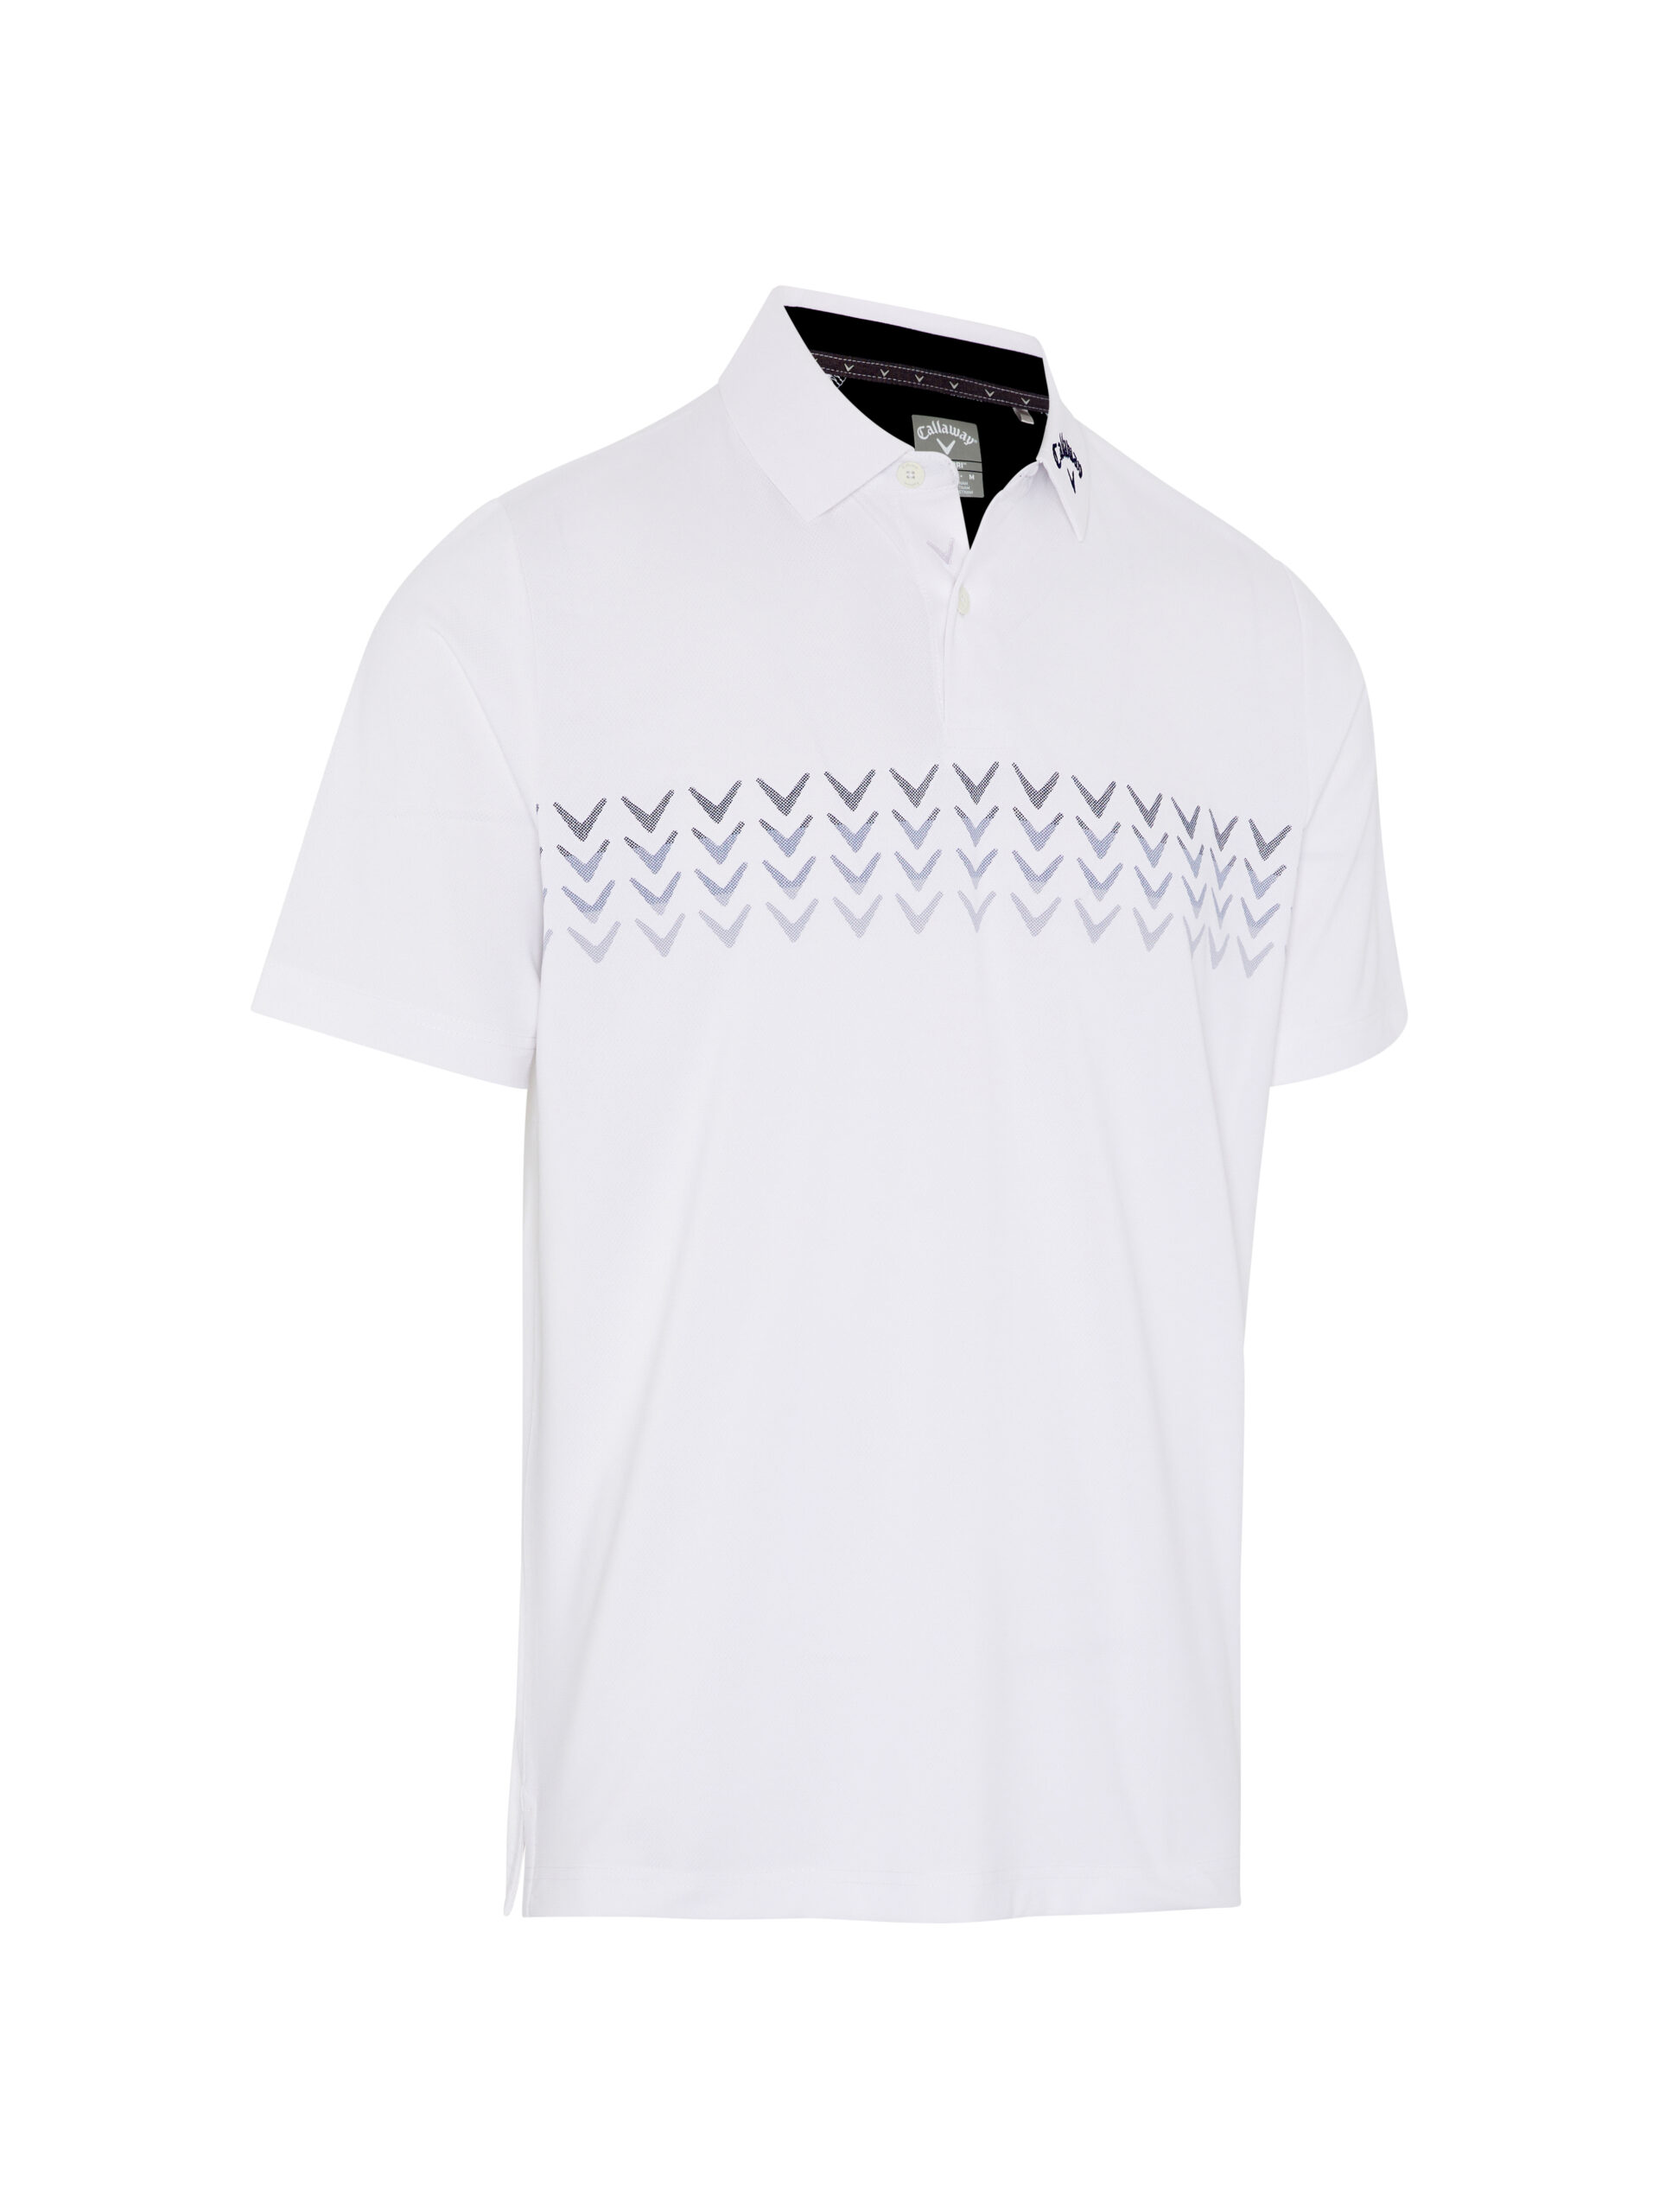 Callaway Chev Block pánské golfové triko, bílé, vel. L